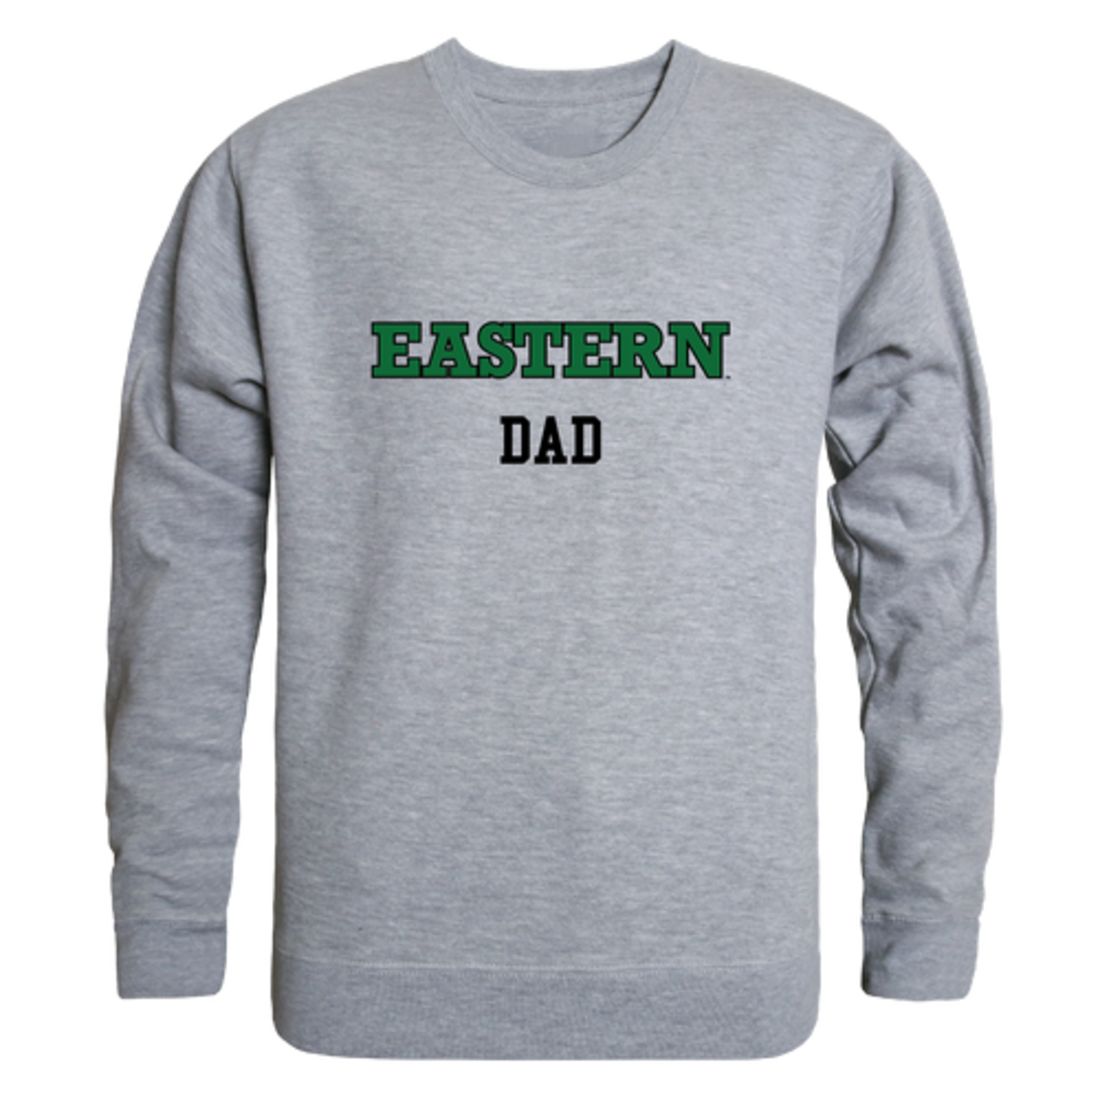 EMU Eastern Michigan University Eagles Dad Fleece Crewneck Pullover Sweatshirt Heather Charcoal-Campus-Wardrobe